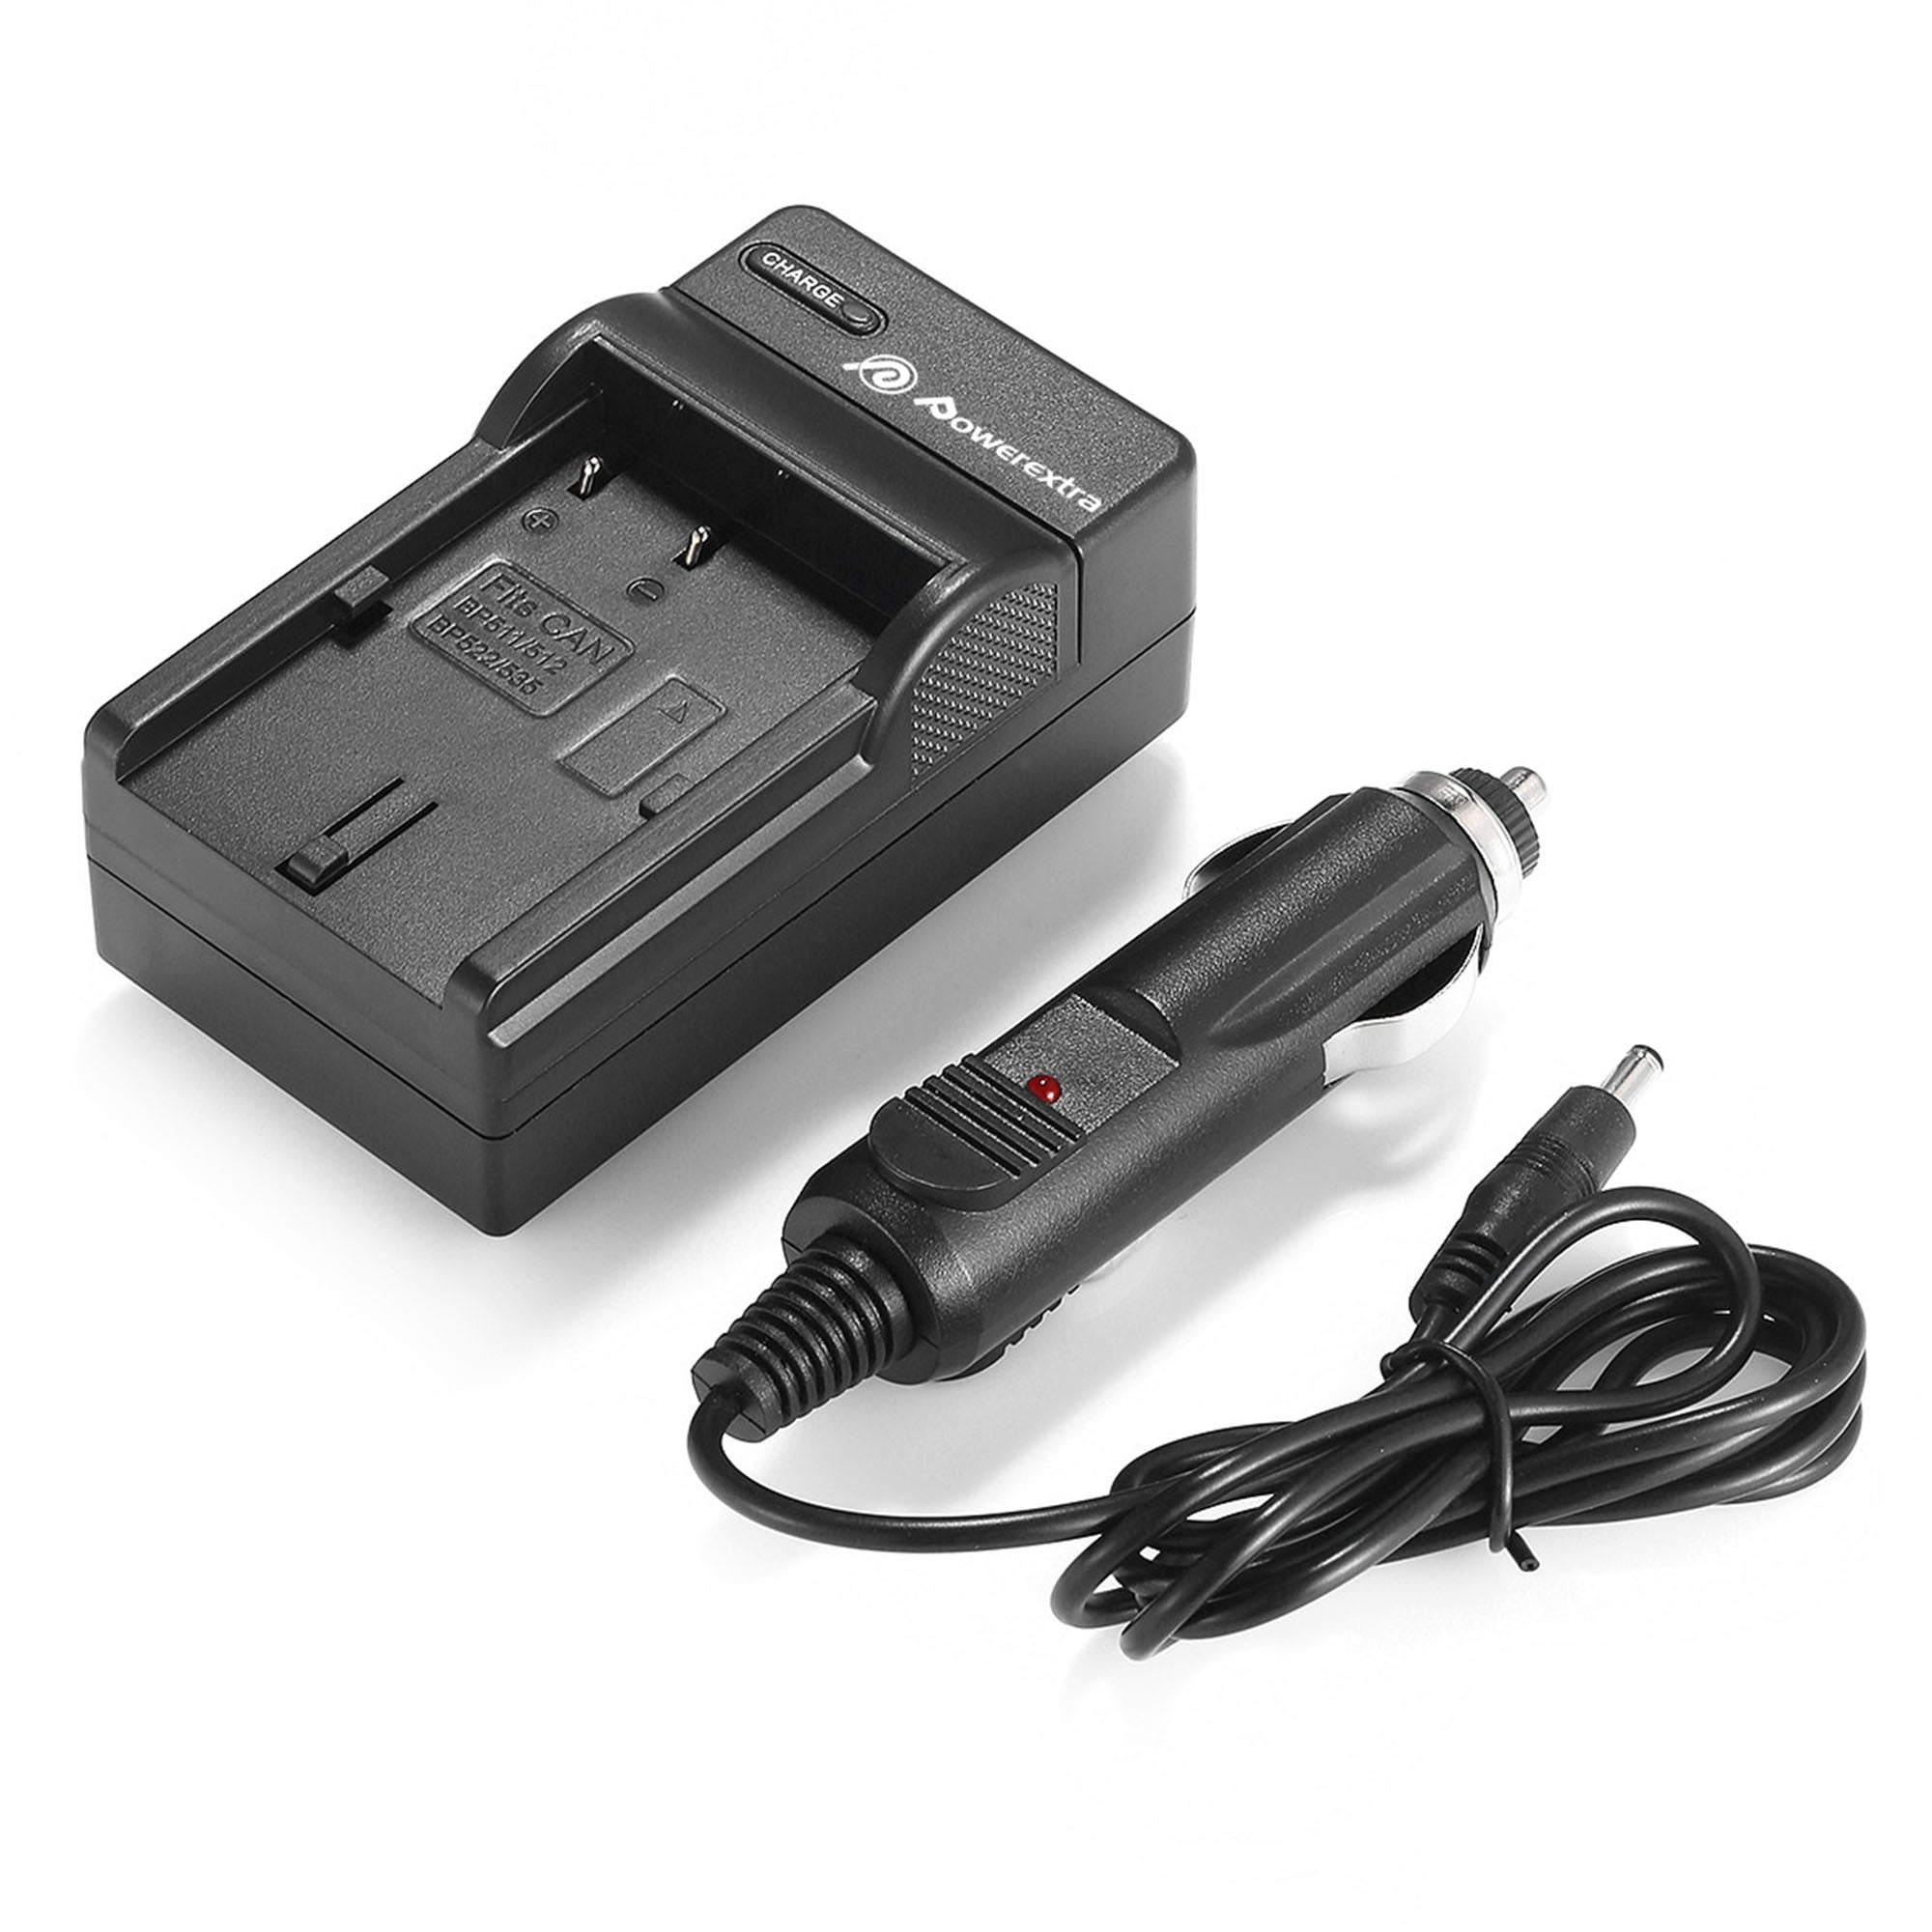 PowerTrust 2-Pack BP-511 BP-511A Battery Charger with Type-C Port Compatible with Canon EOS 40D 50D 30D 5D 10D 300D 5D Mark I